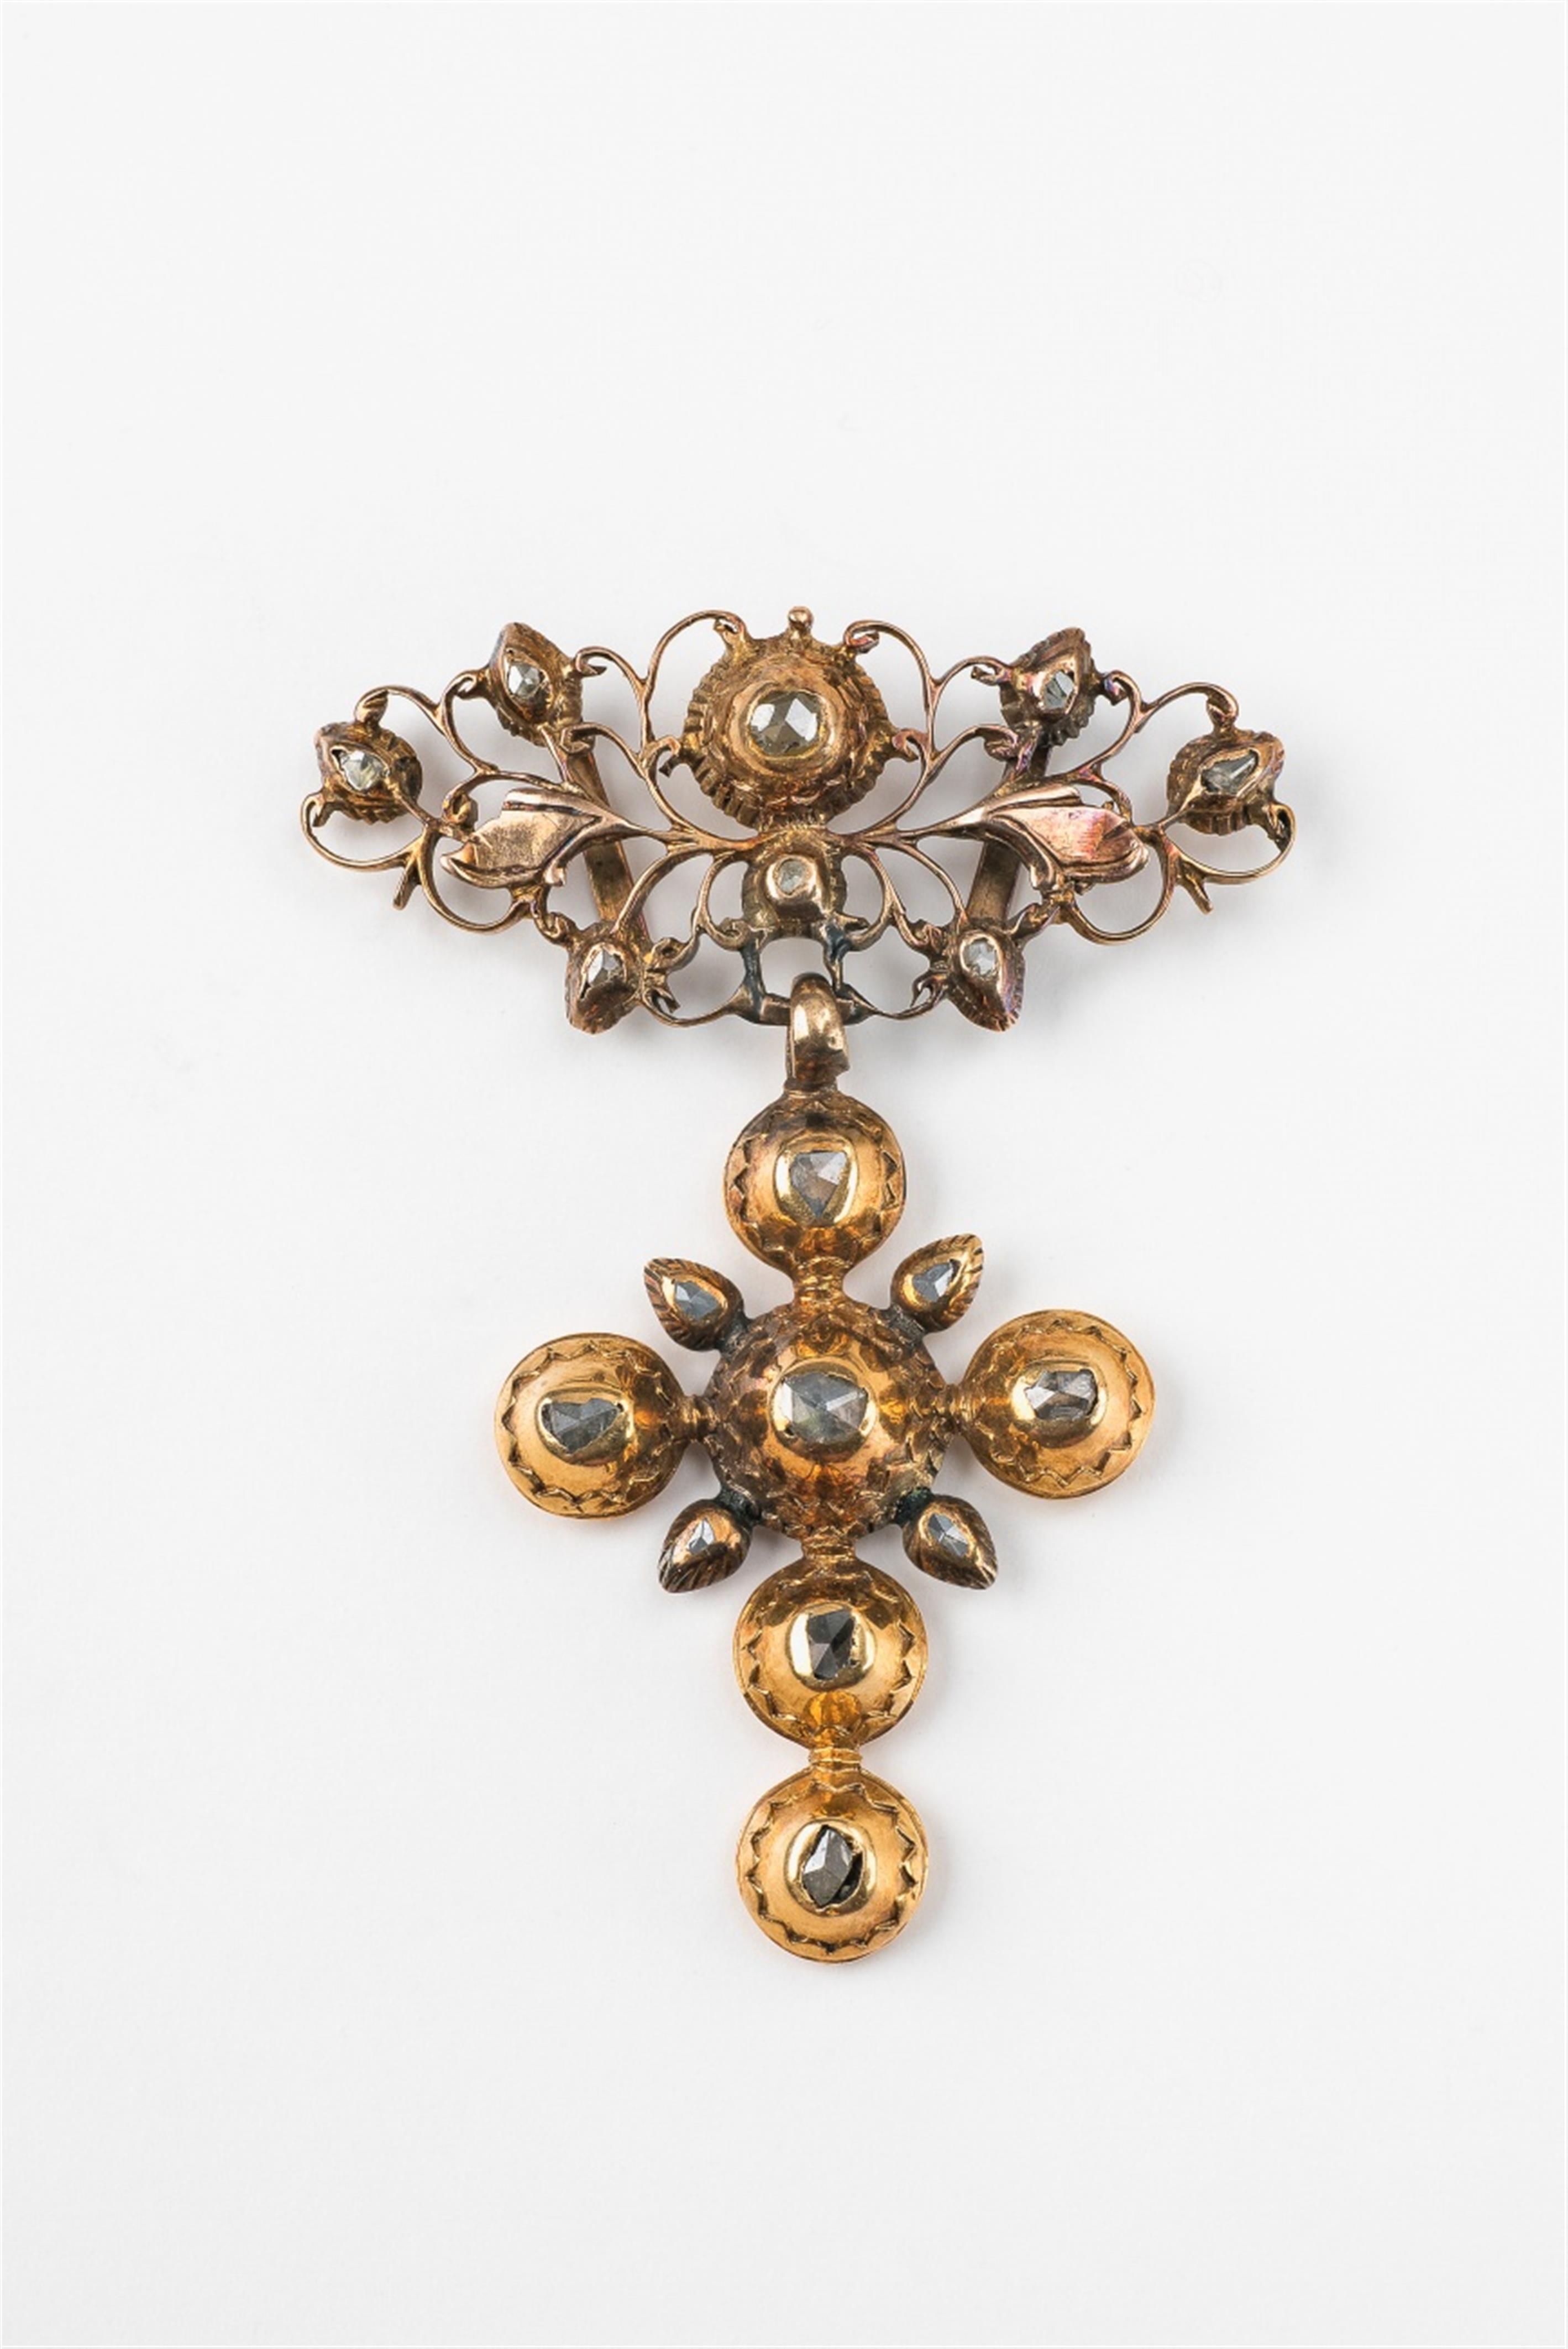 A Rococo 9k gold and diamond cross pendant - image-1